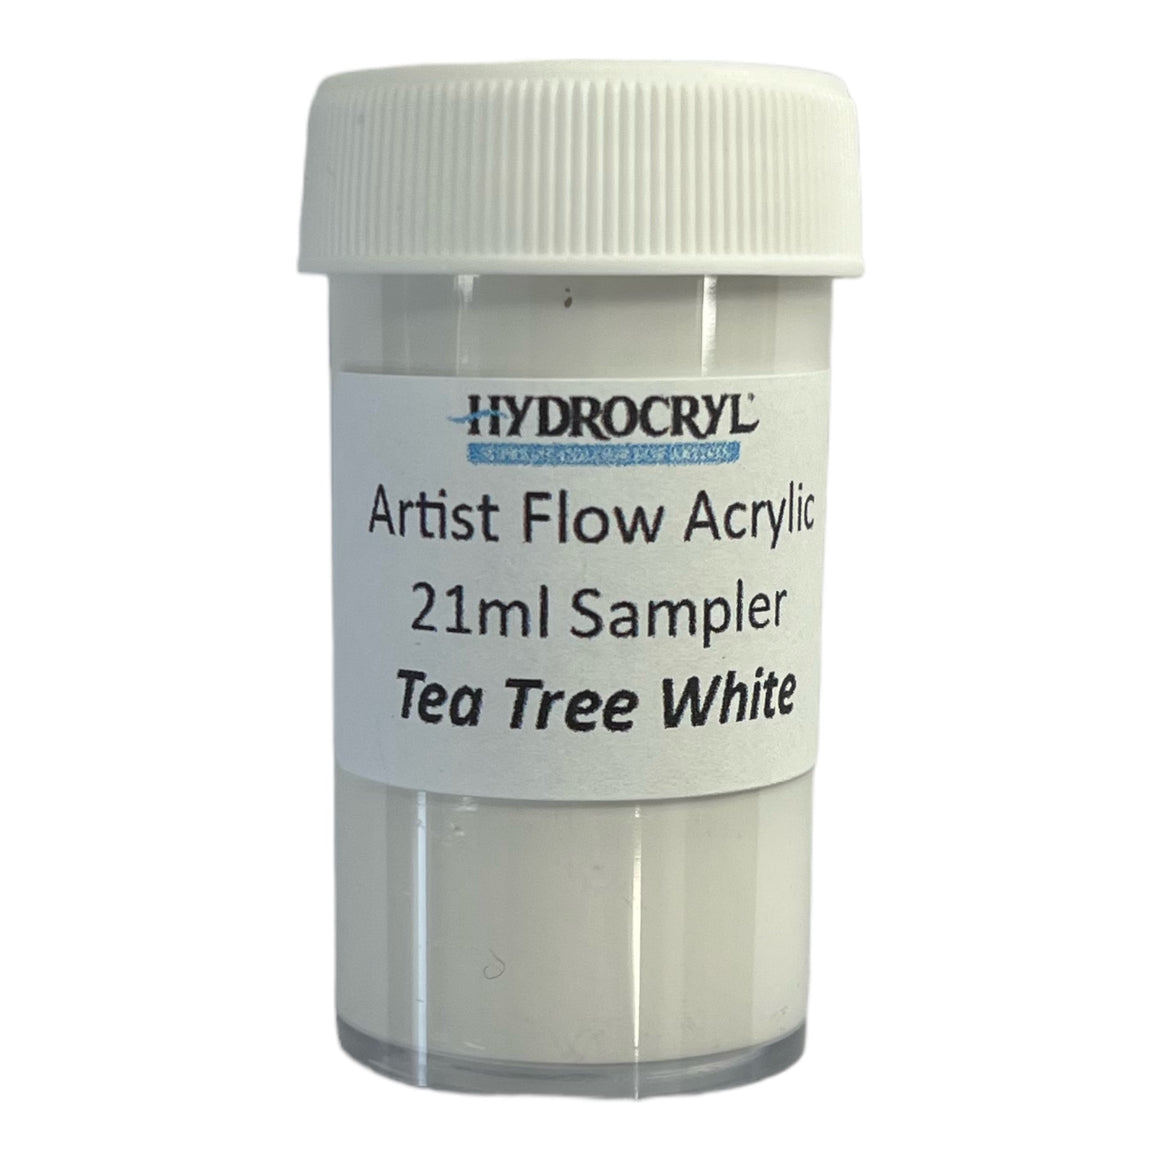 TEA TREE WHITE Hydrocryl Artist Flow Acrylic 21ml Sampler